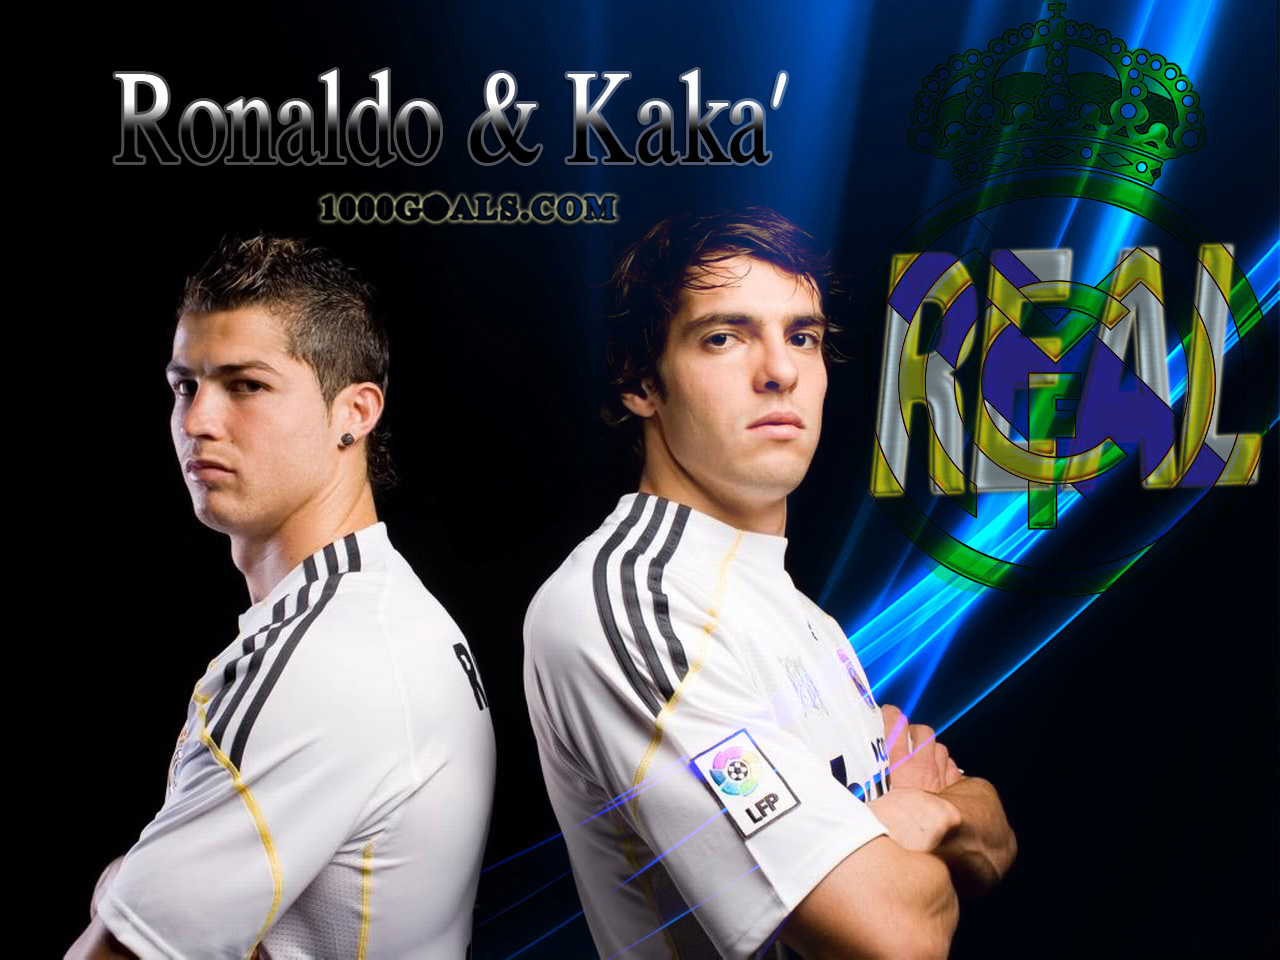 http://3.bp.blogspot.com/-BV0y0QWjY3w/TckRpizDm3I/AAAAAAAAABg/lv41p43zyZs/s1600/Cristiano-Ronaldo-Kaka-Wallpaper.jpg